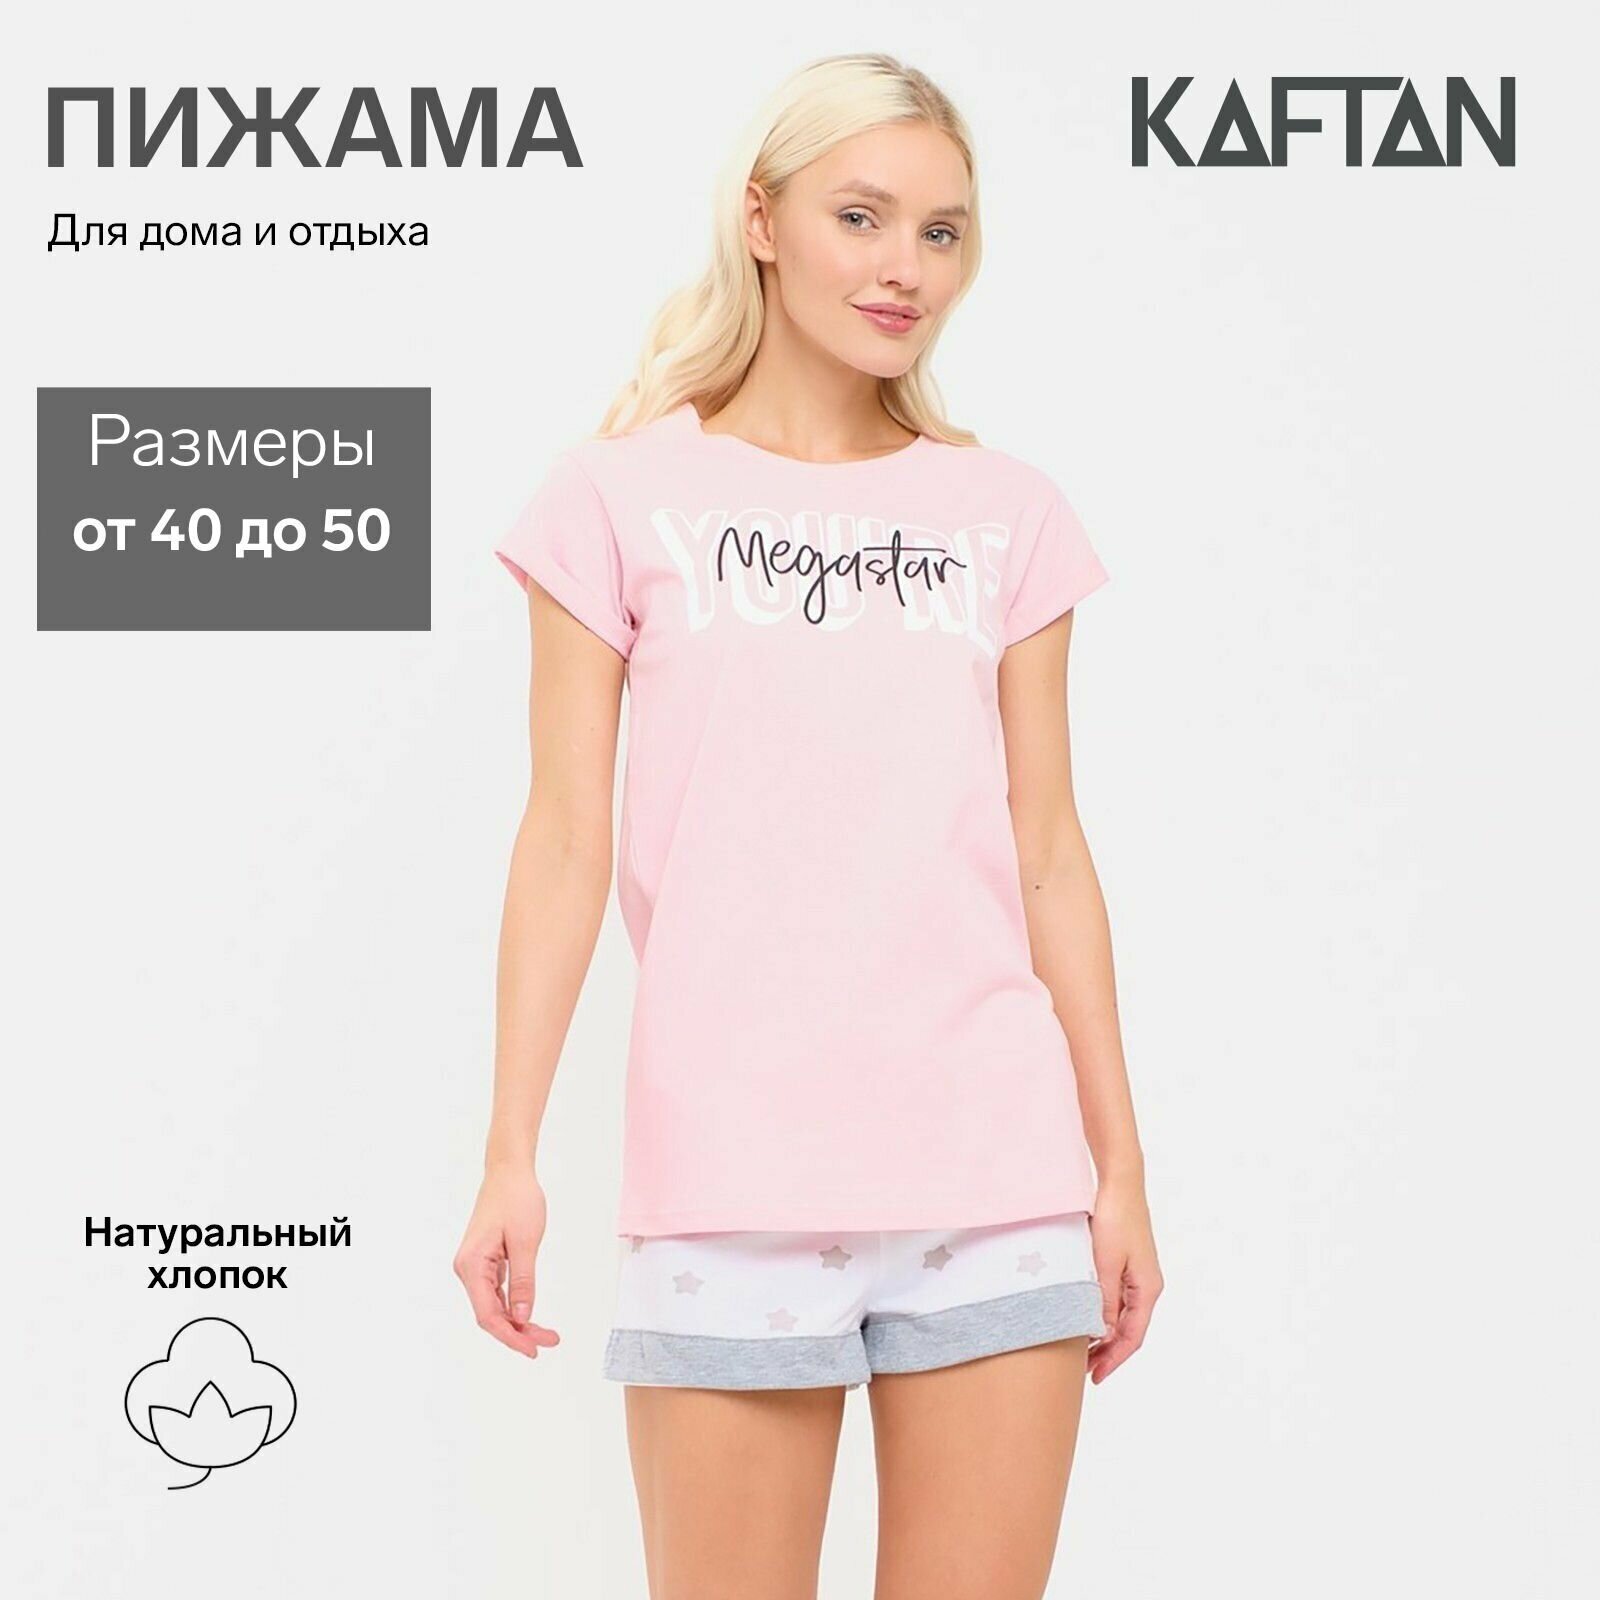 KAFTAN Пижама женская (футболка и шорты) KAFTAN "Megastar" р. 44-46 - фотография № 1